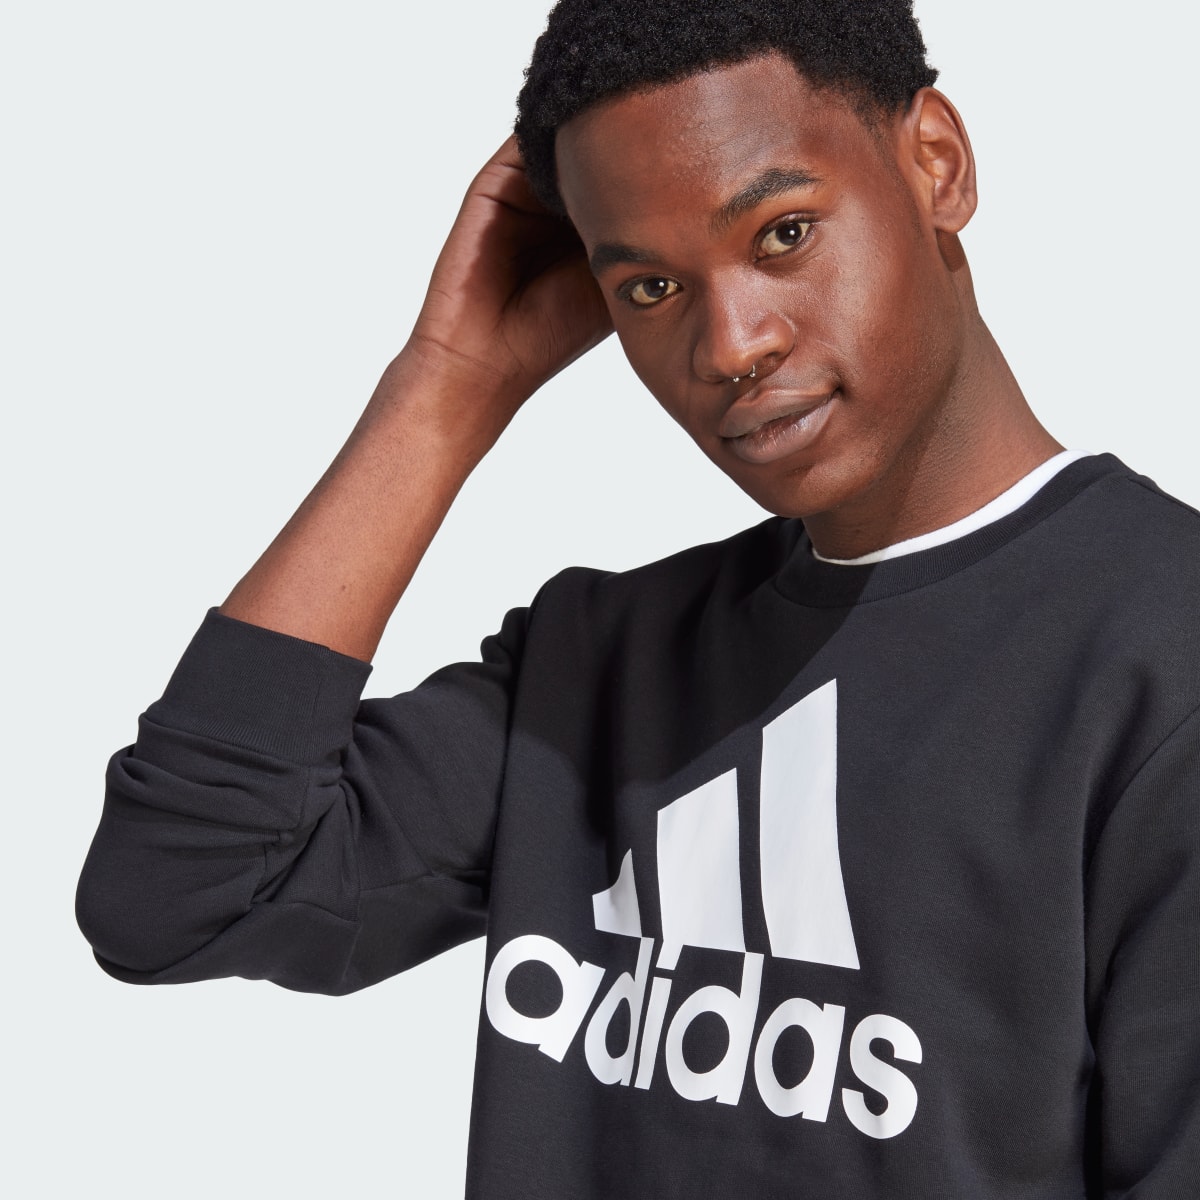 Adidas Essentials Big Logo Sweatshirt. 6